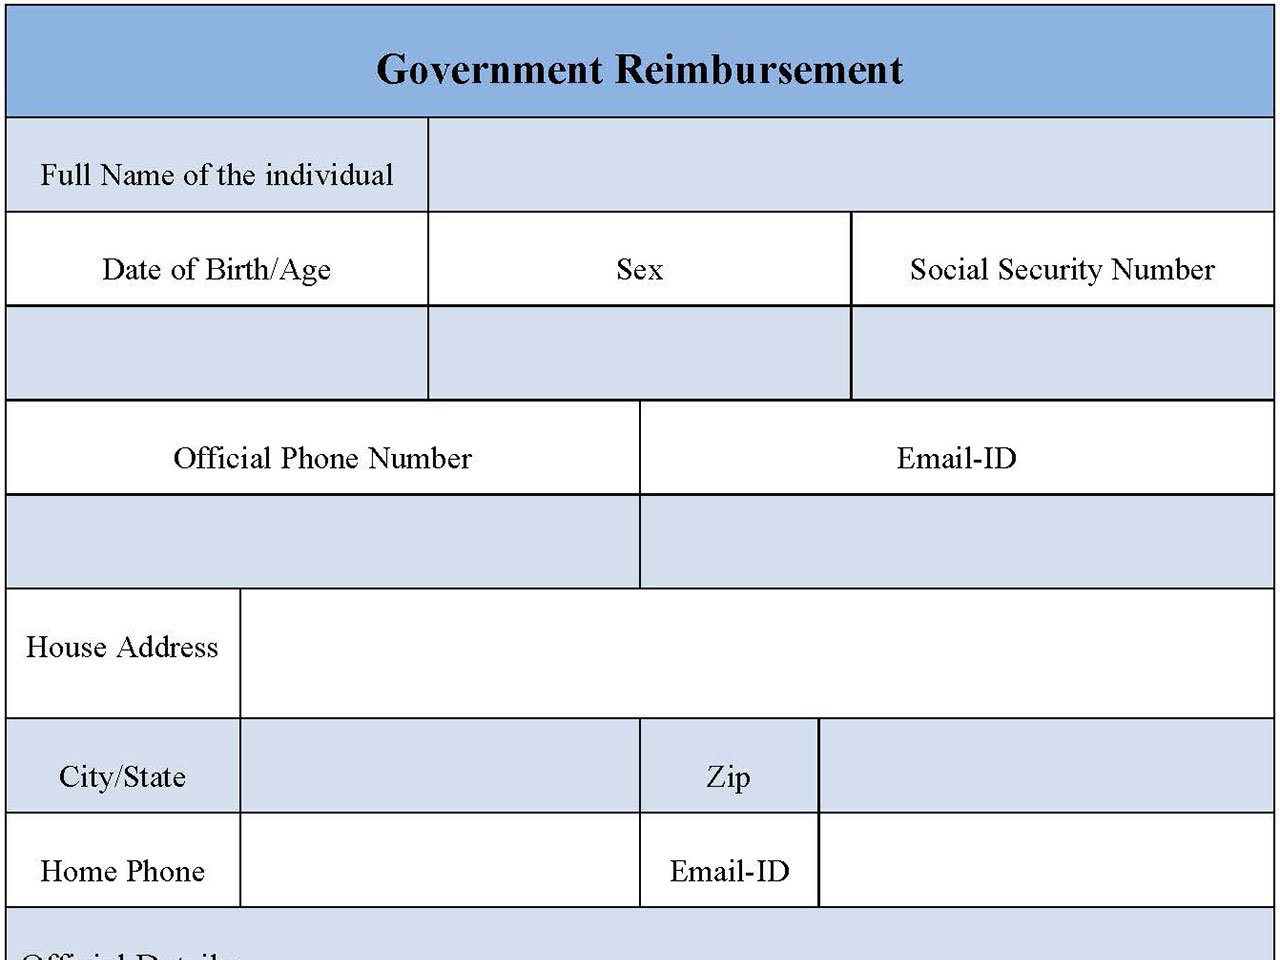 Government Reimbursement Form